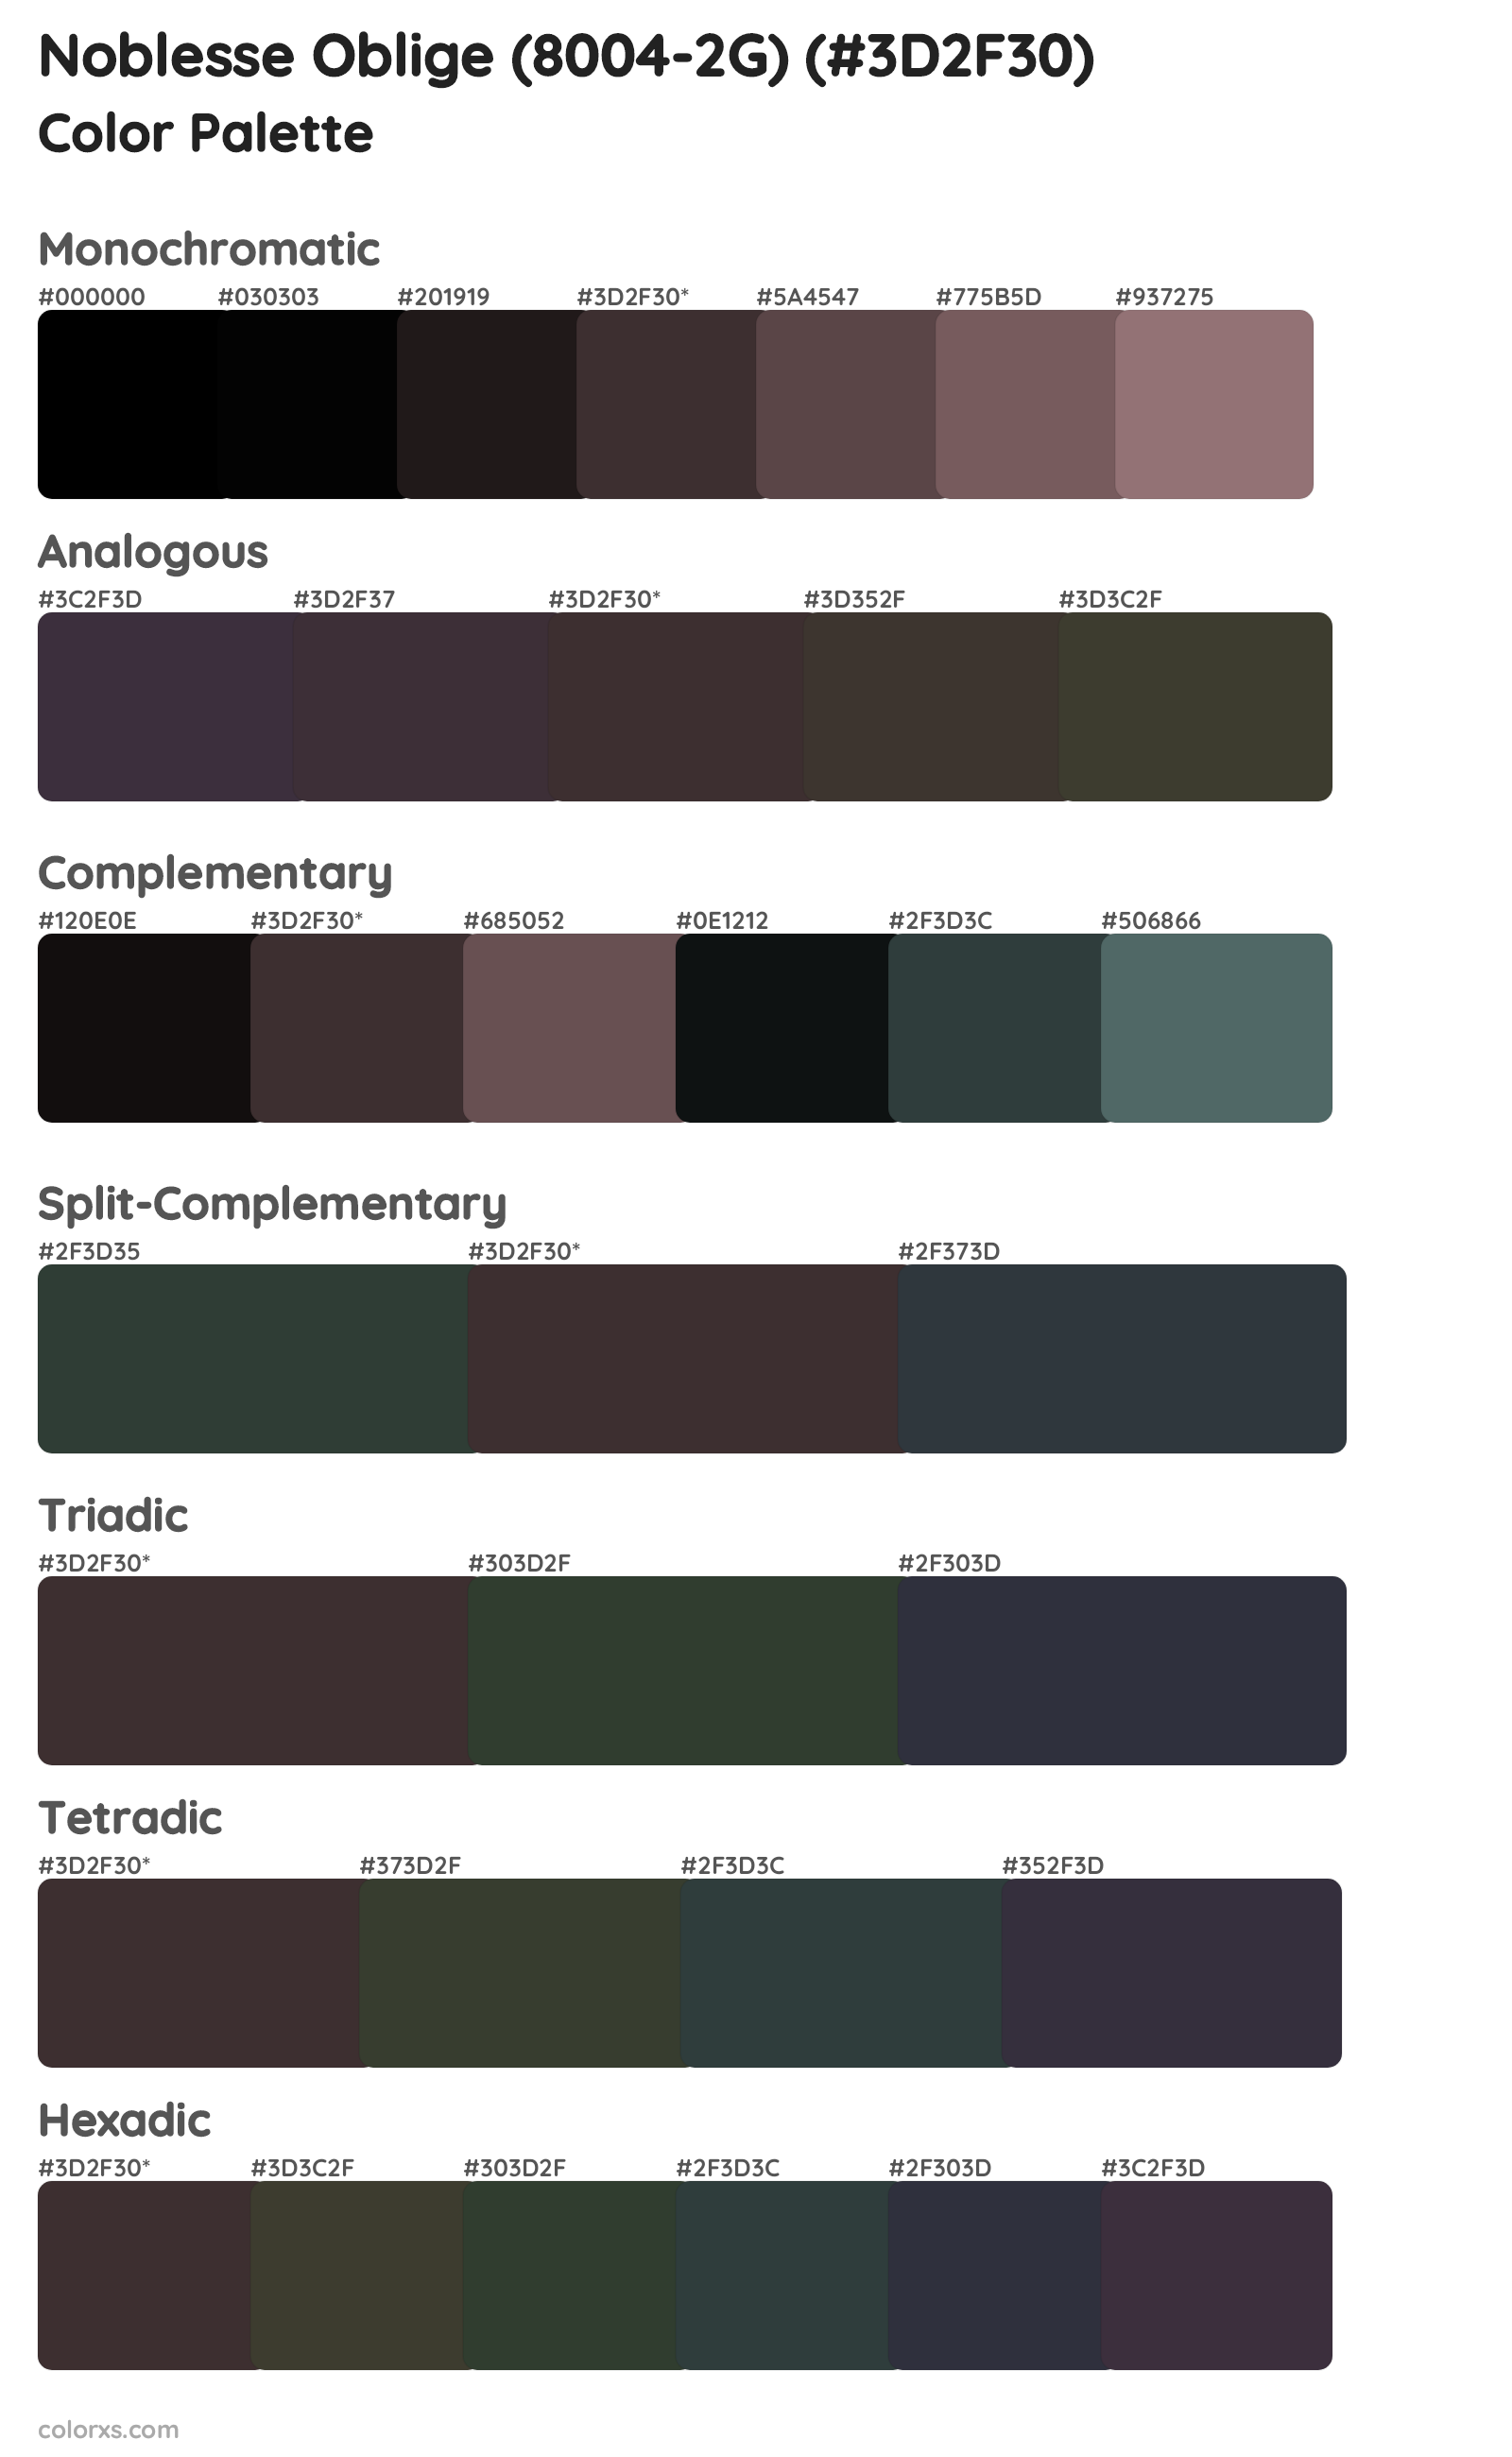 Noblesse Oblige (8004-2G) Color Scheme Palettes